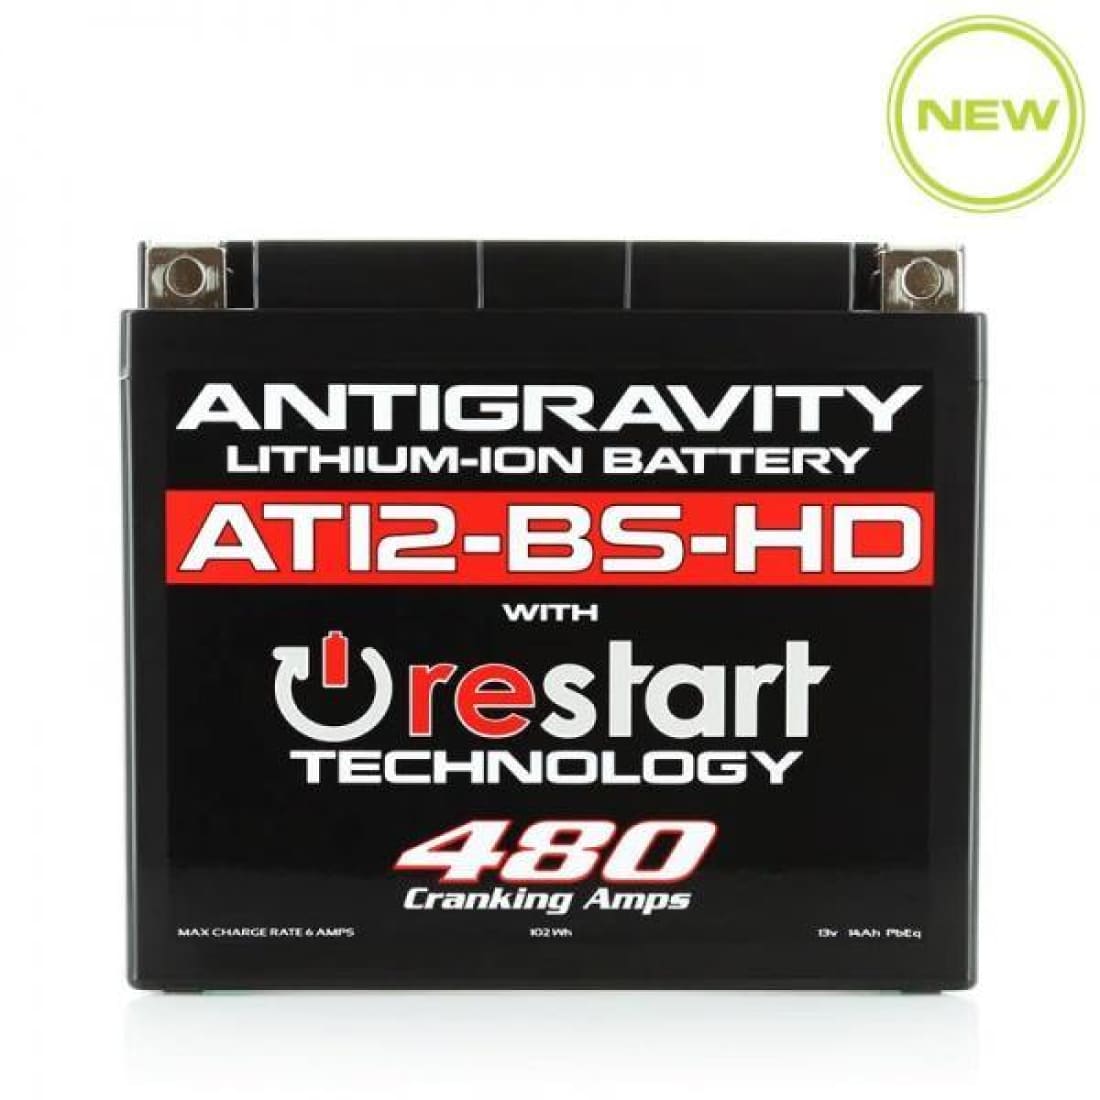 antigravity battery at-bs-hd 12 restart battery